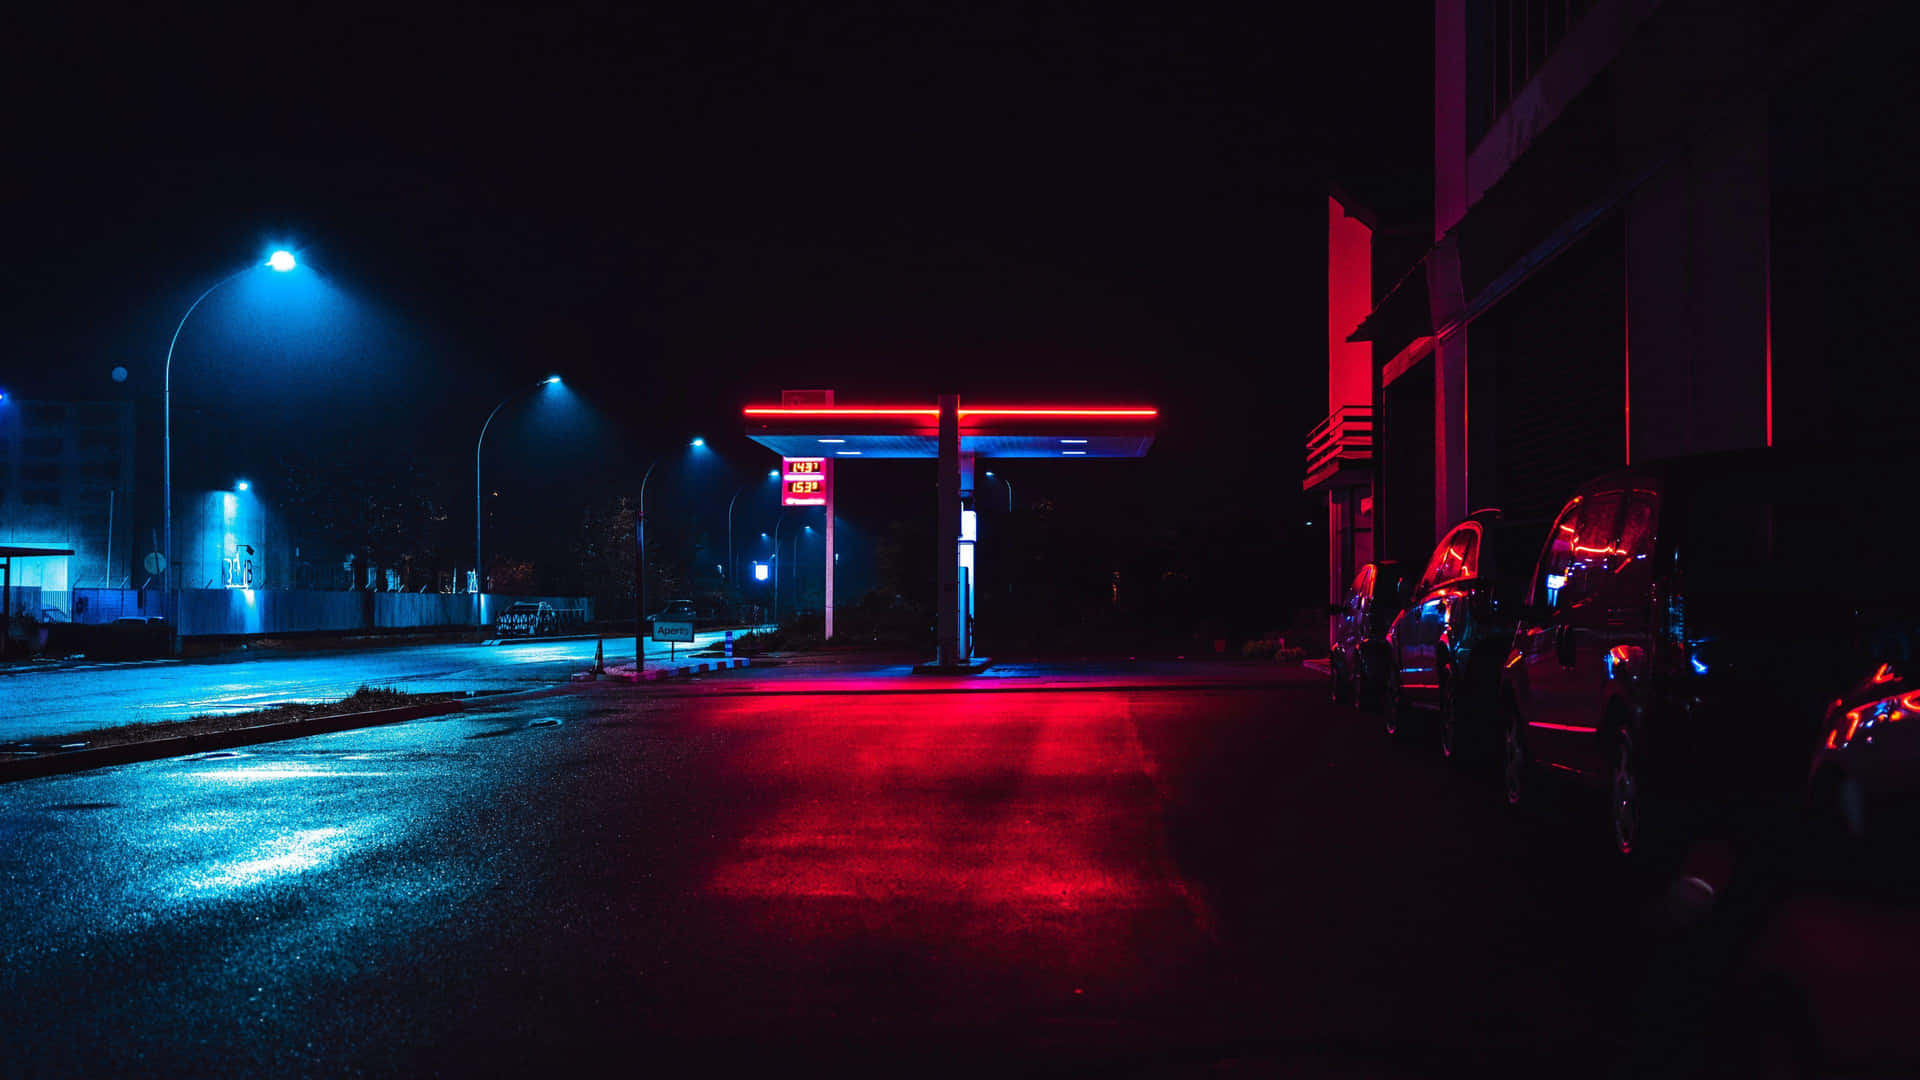 Neon Lit Gas Stationat Night Wallpaper